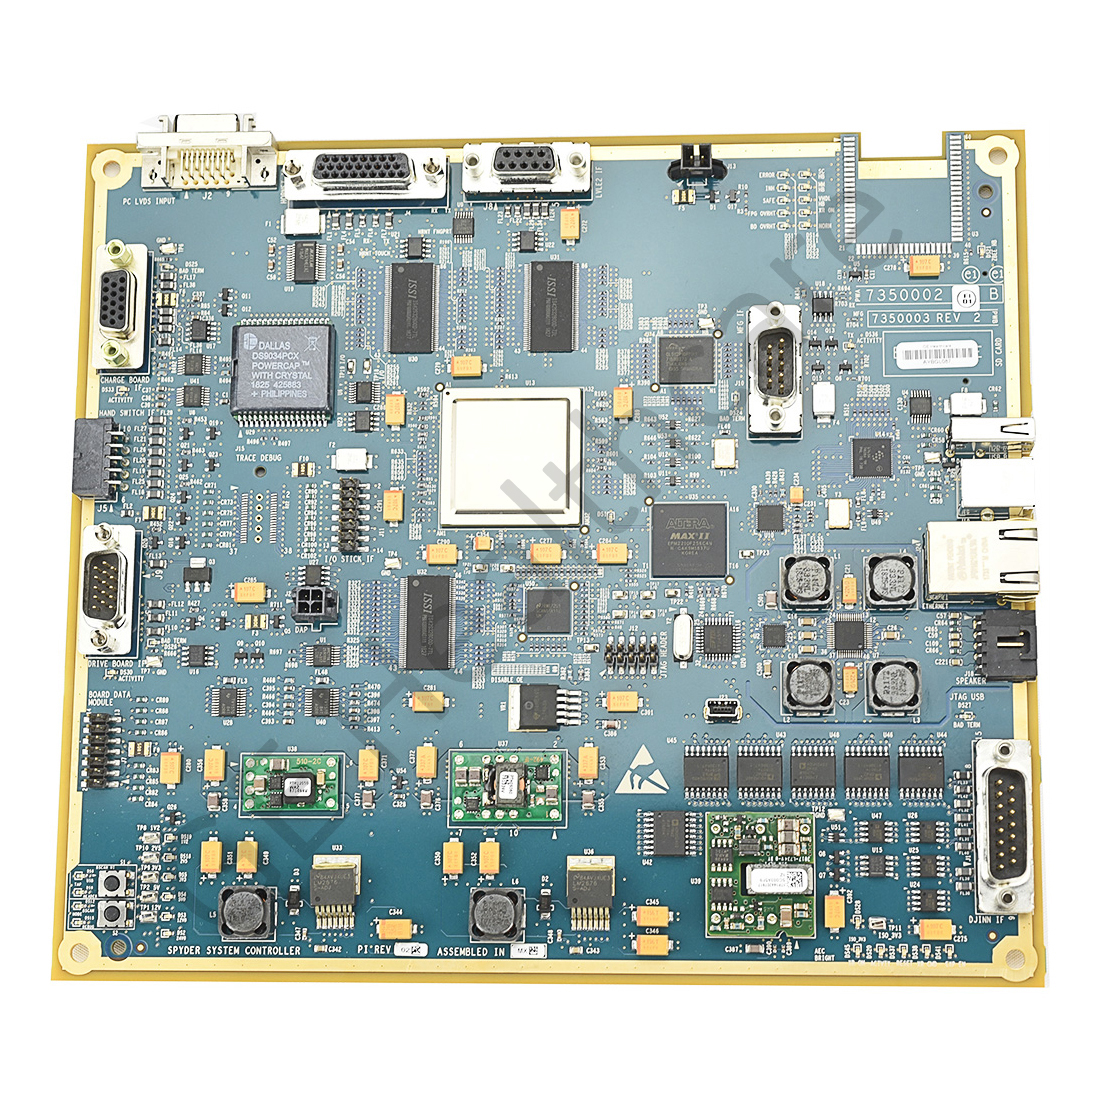 Programmed Spyder System Controller Board 7350002-R